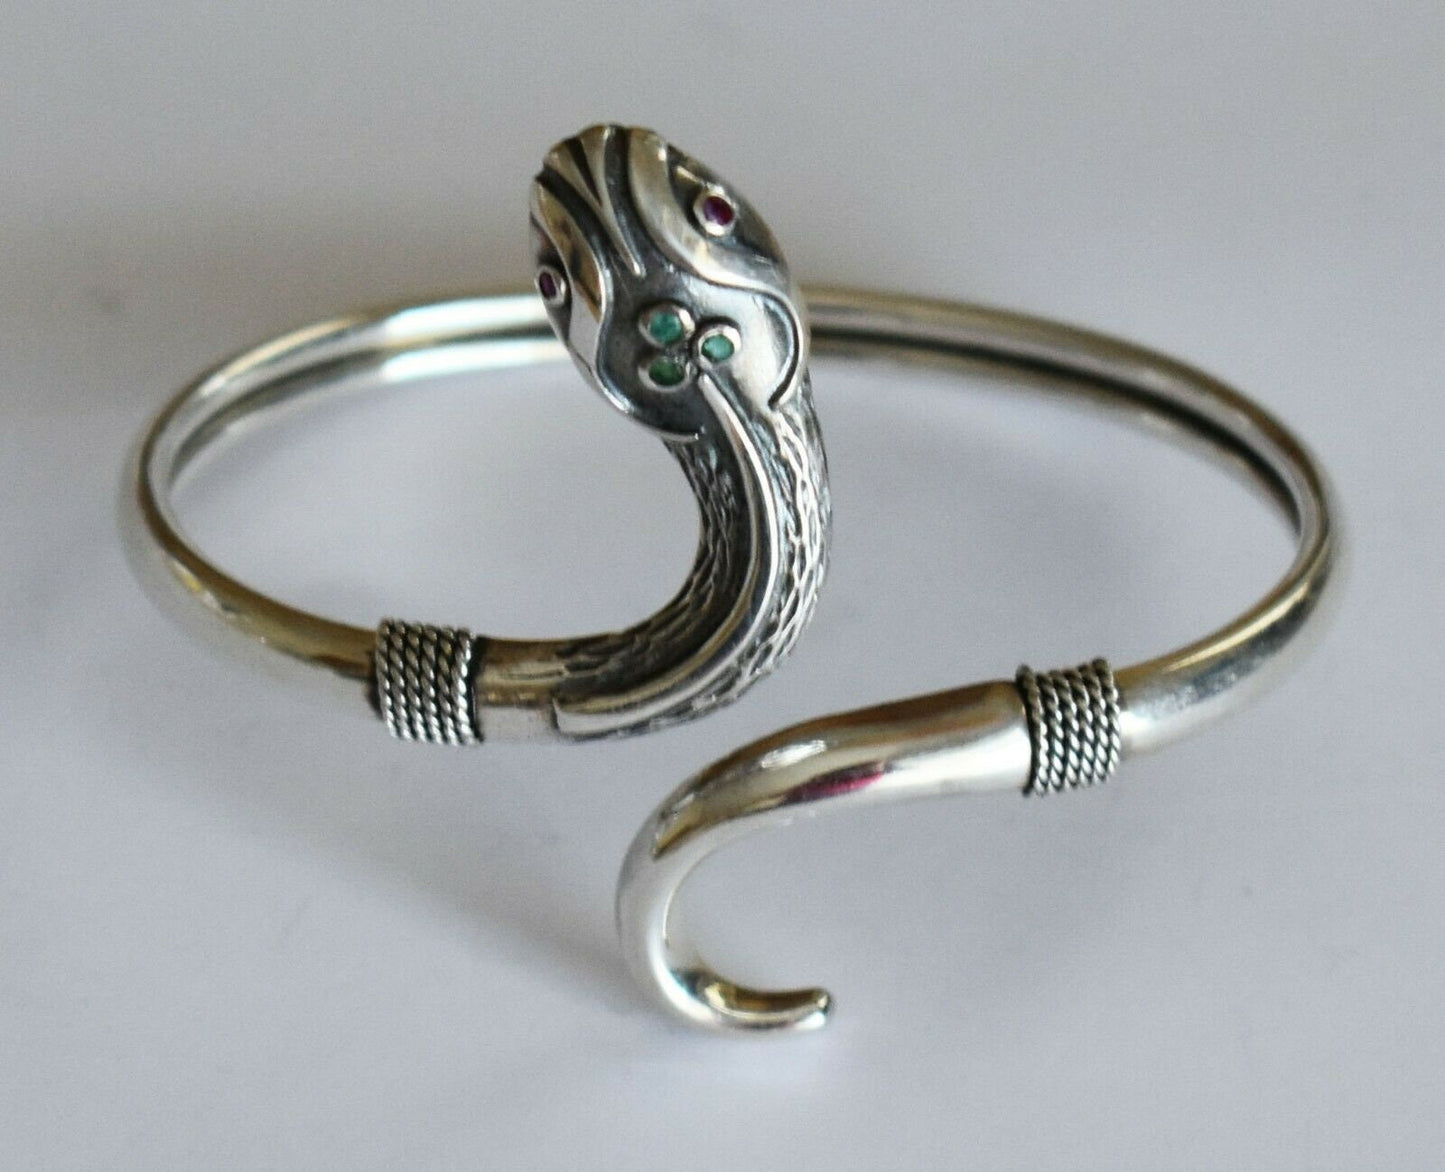 Minoan Snake - Ruby & Emerald - Ancient Greek Symbol of rebirth, transformation, immortality healing. - Bracelet - 925 Sterling Silver